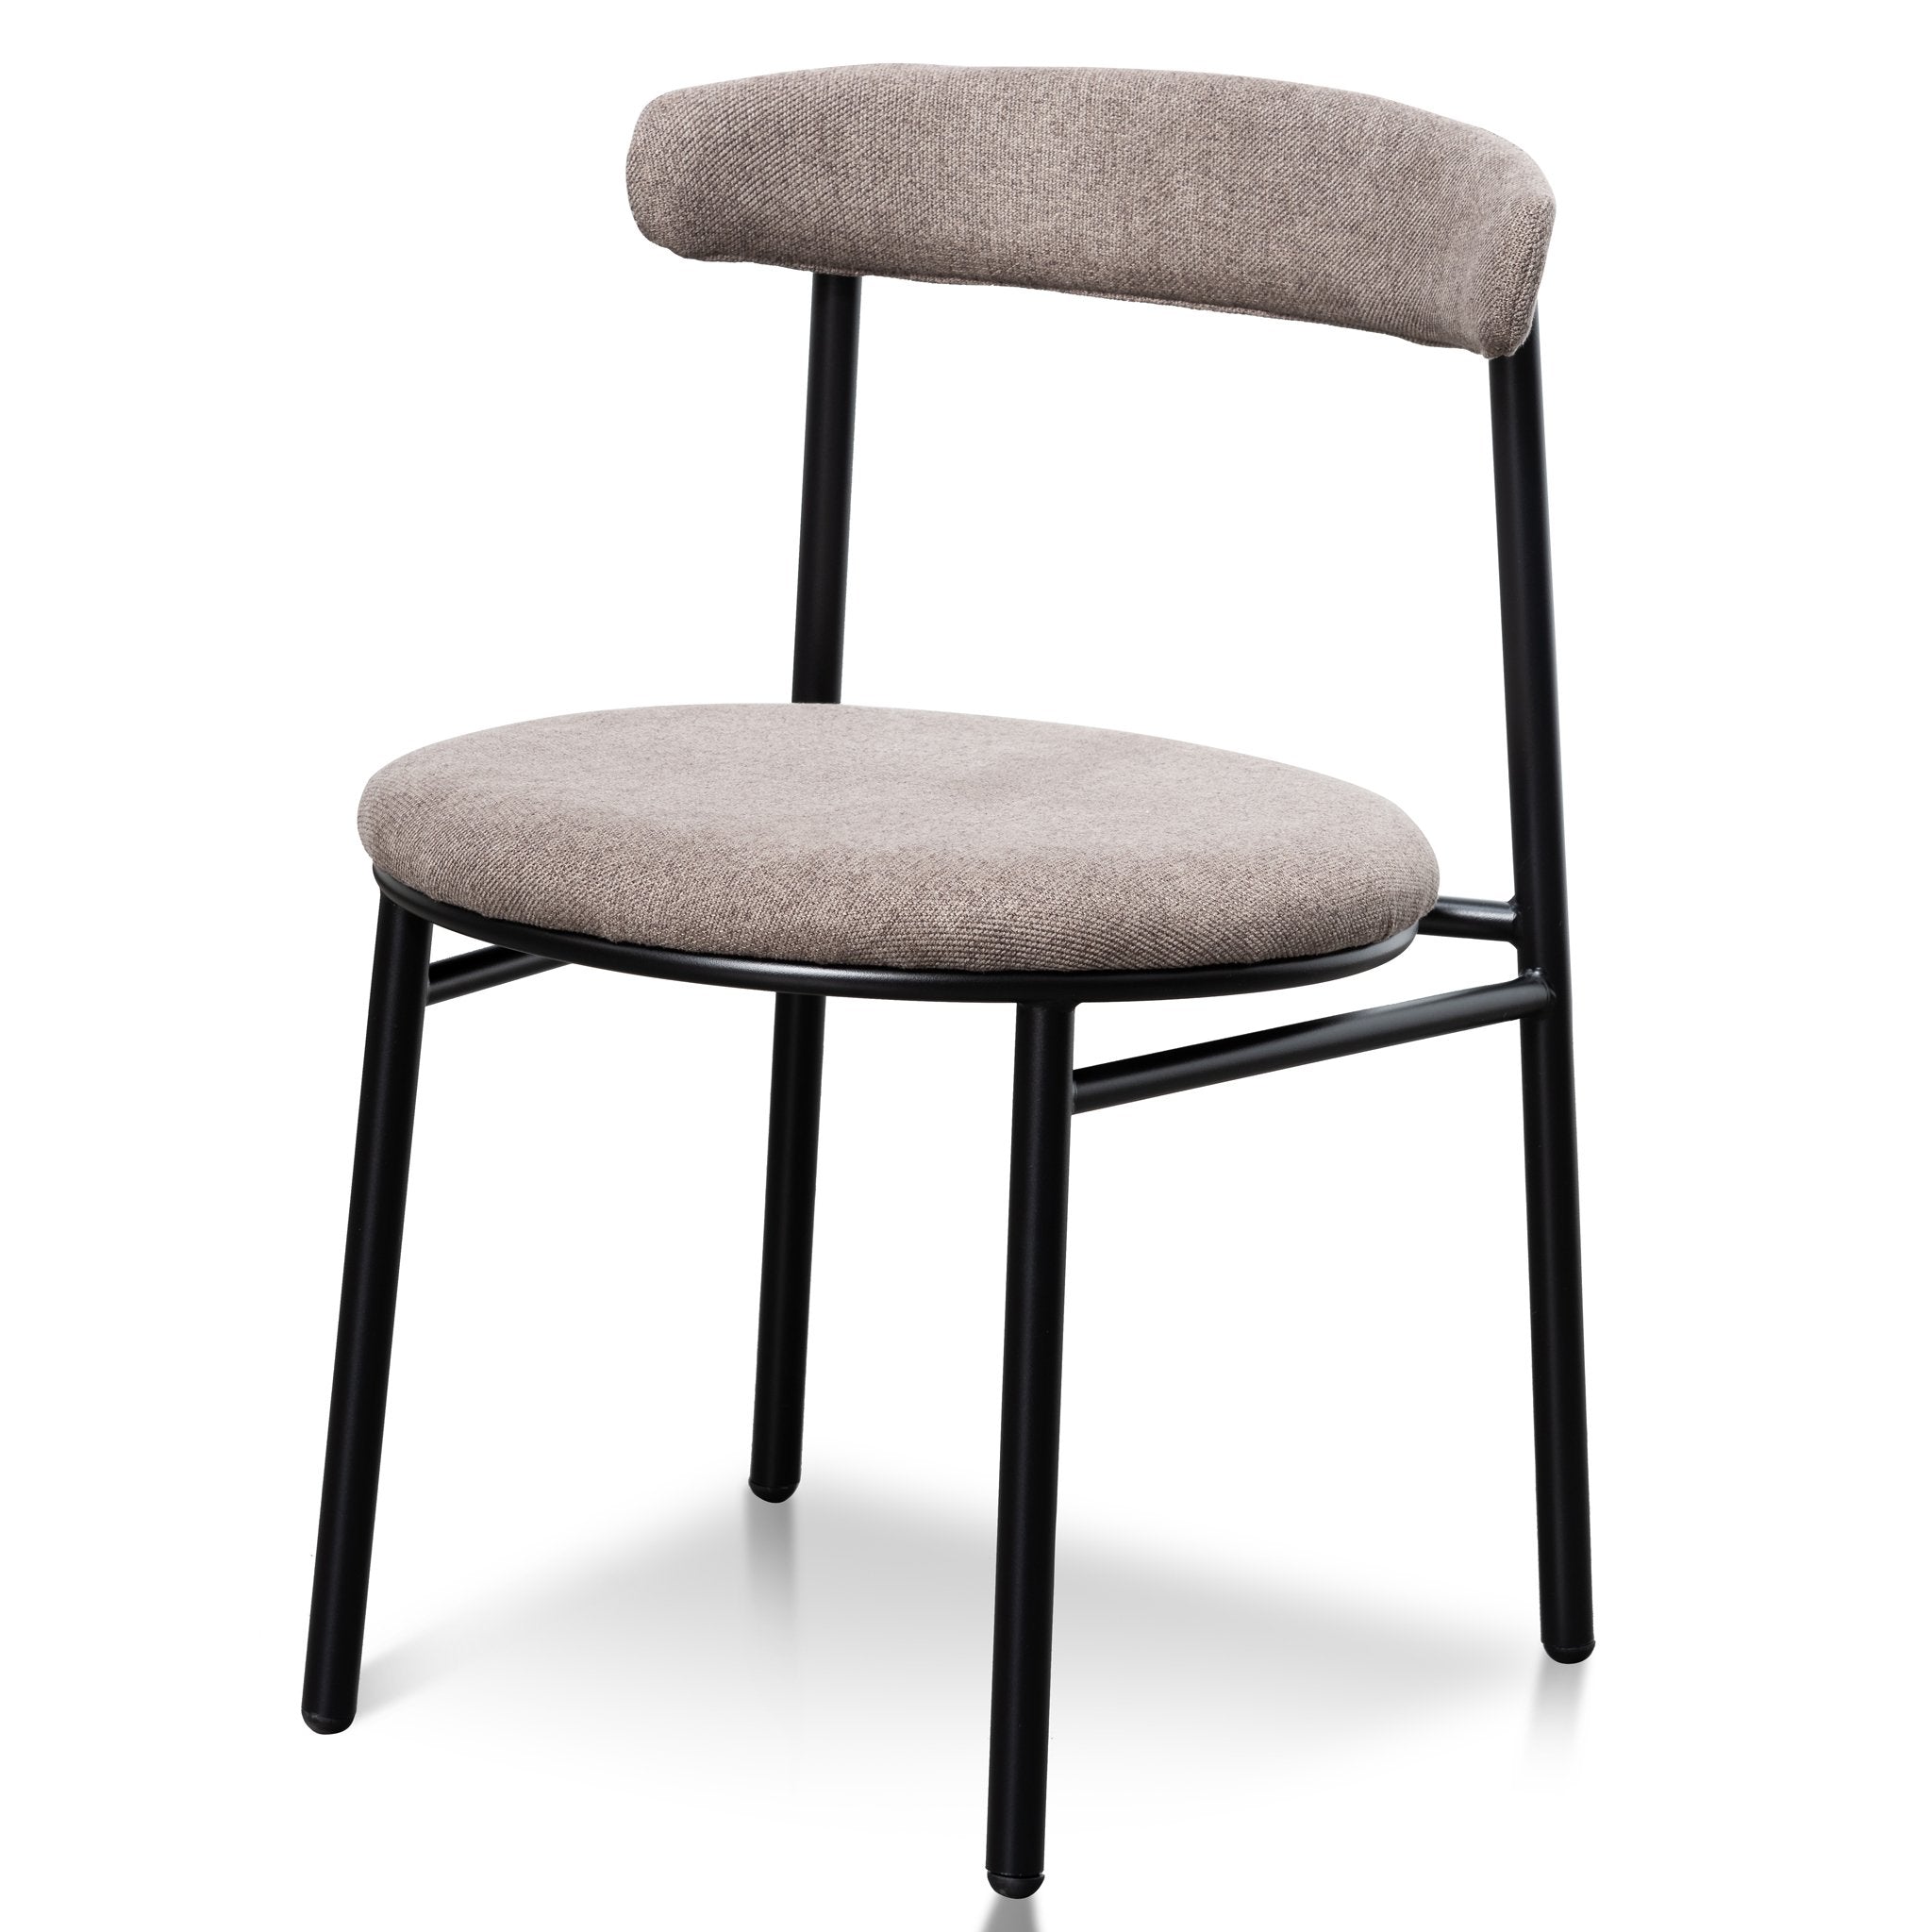 Samantha Fabric Dining Chair - Caramel Grey with Black Legs